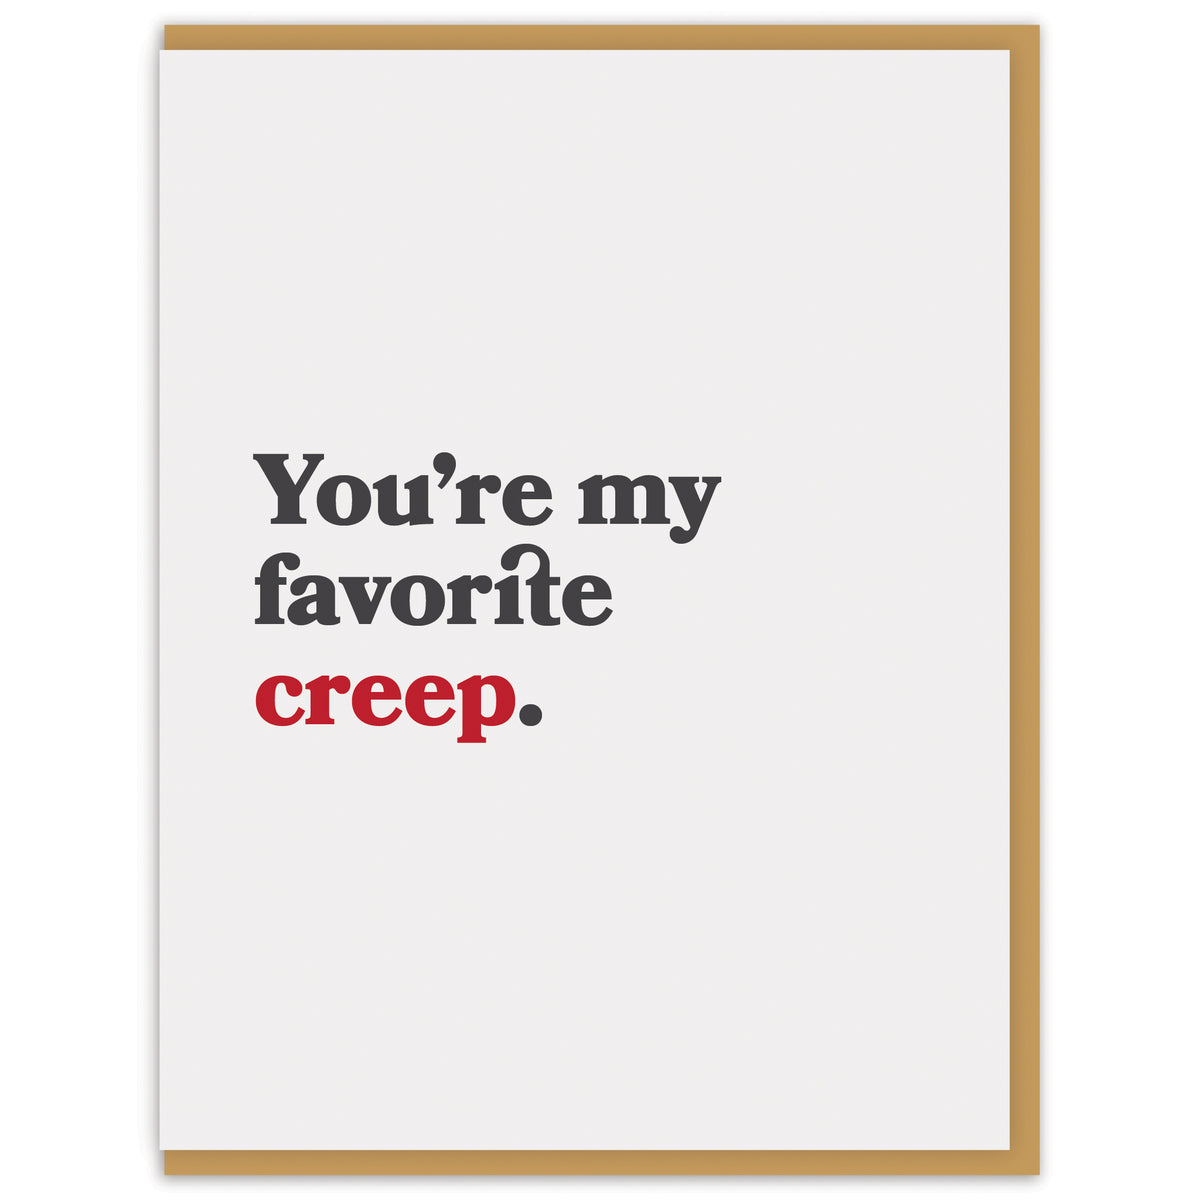 You’re my favorite creep.